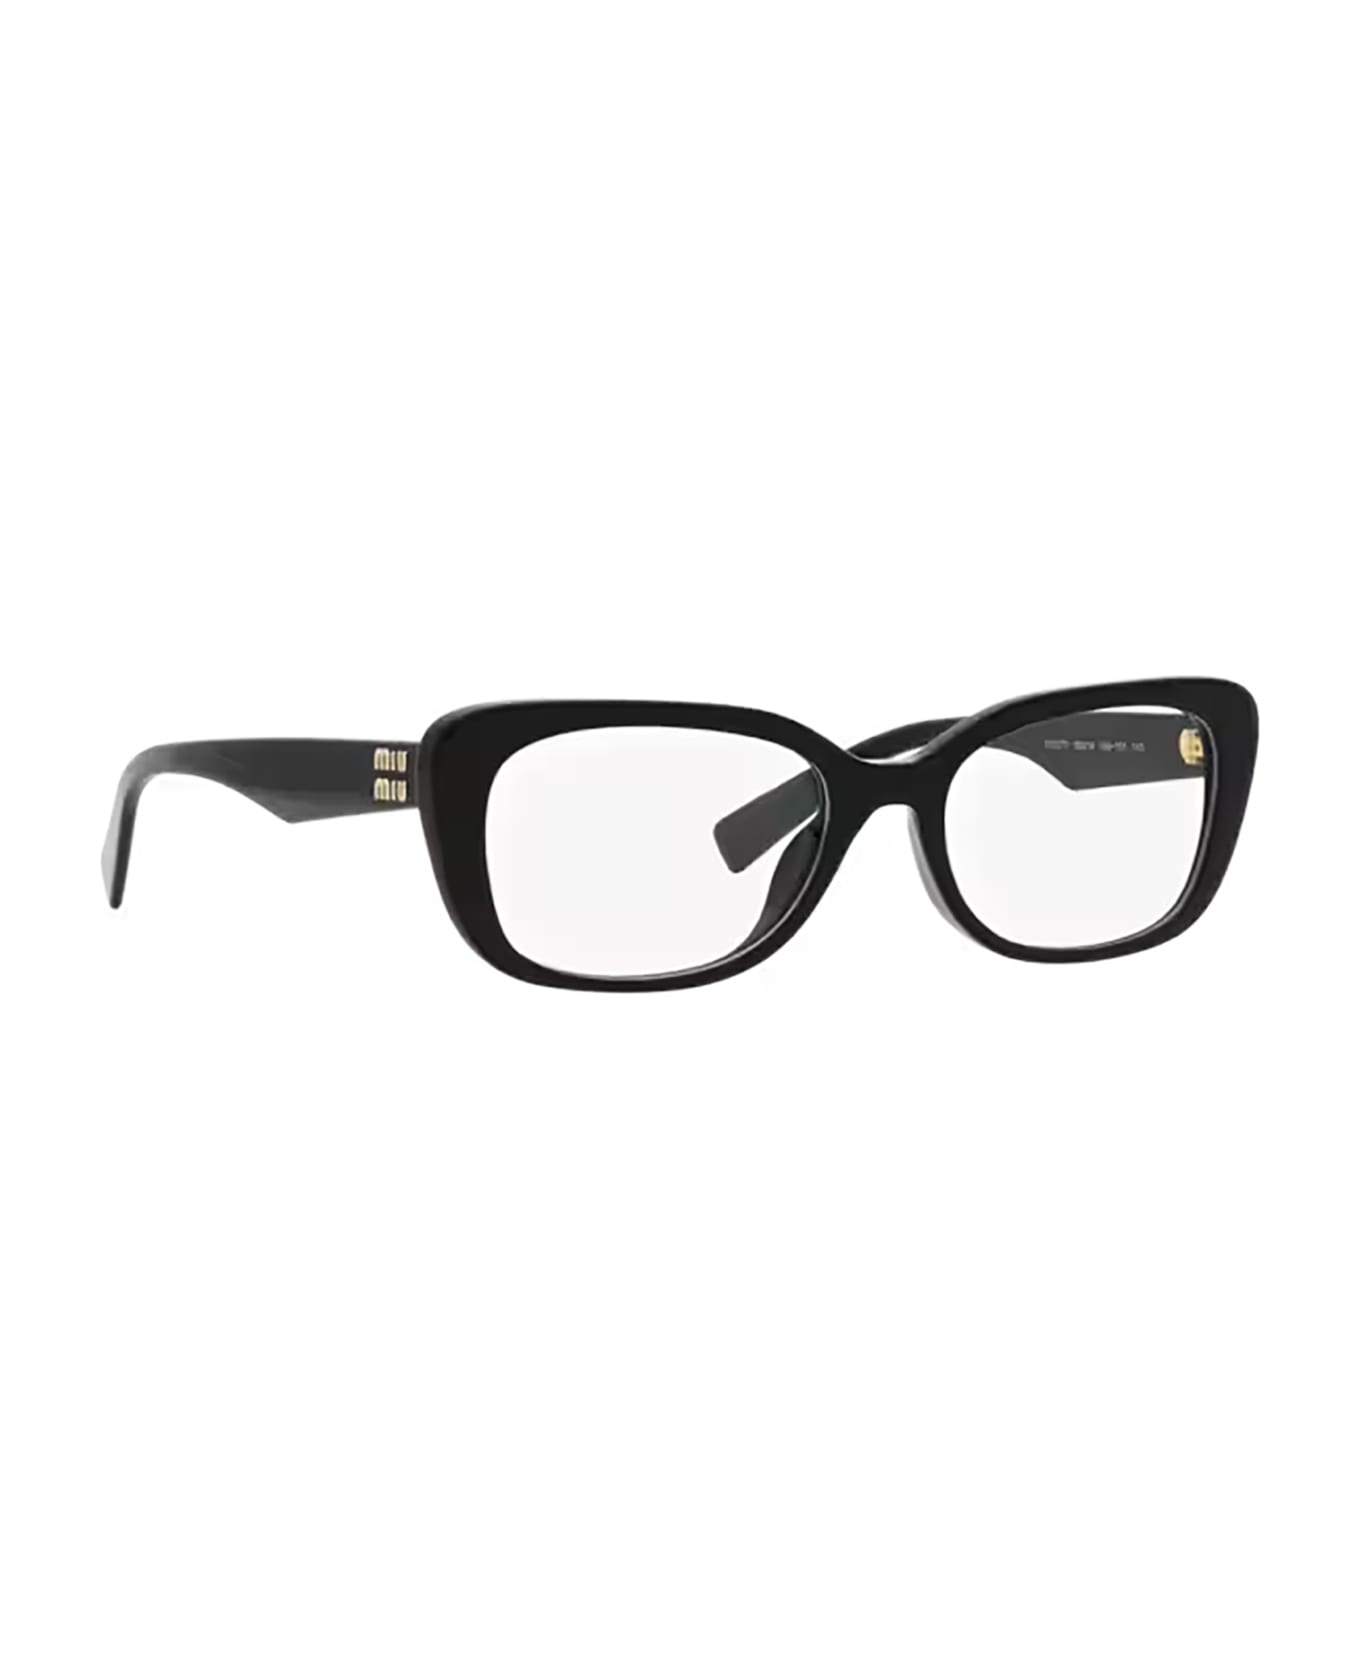 Miu Miu Eyewear Mu 07vv Black Glasses - Black アイウェア